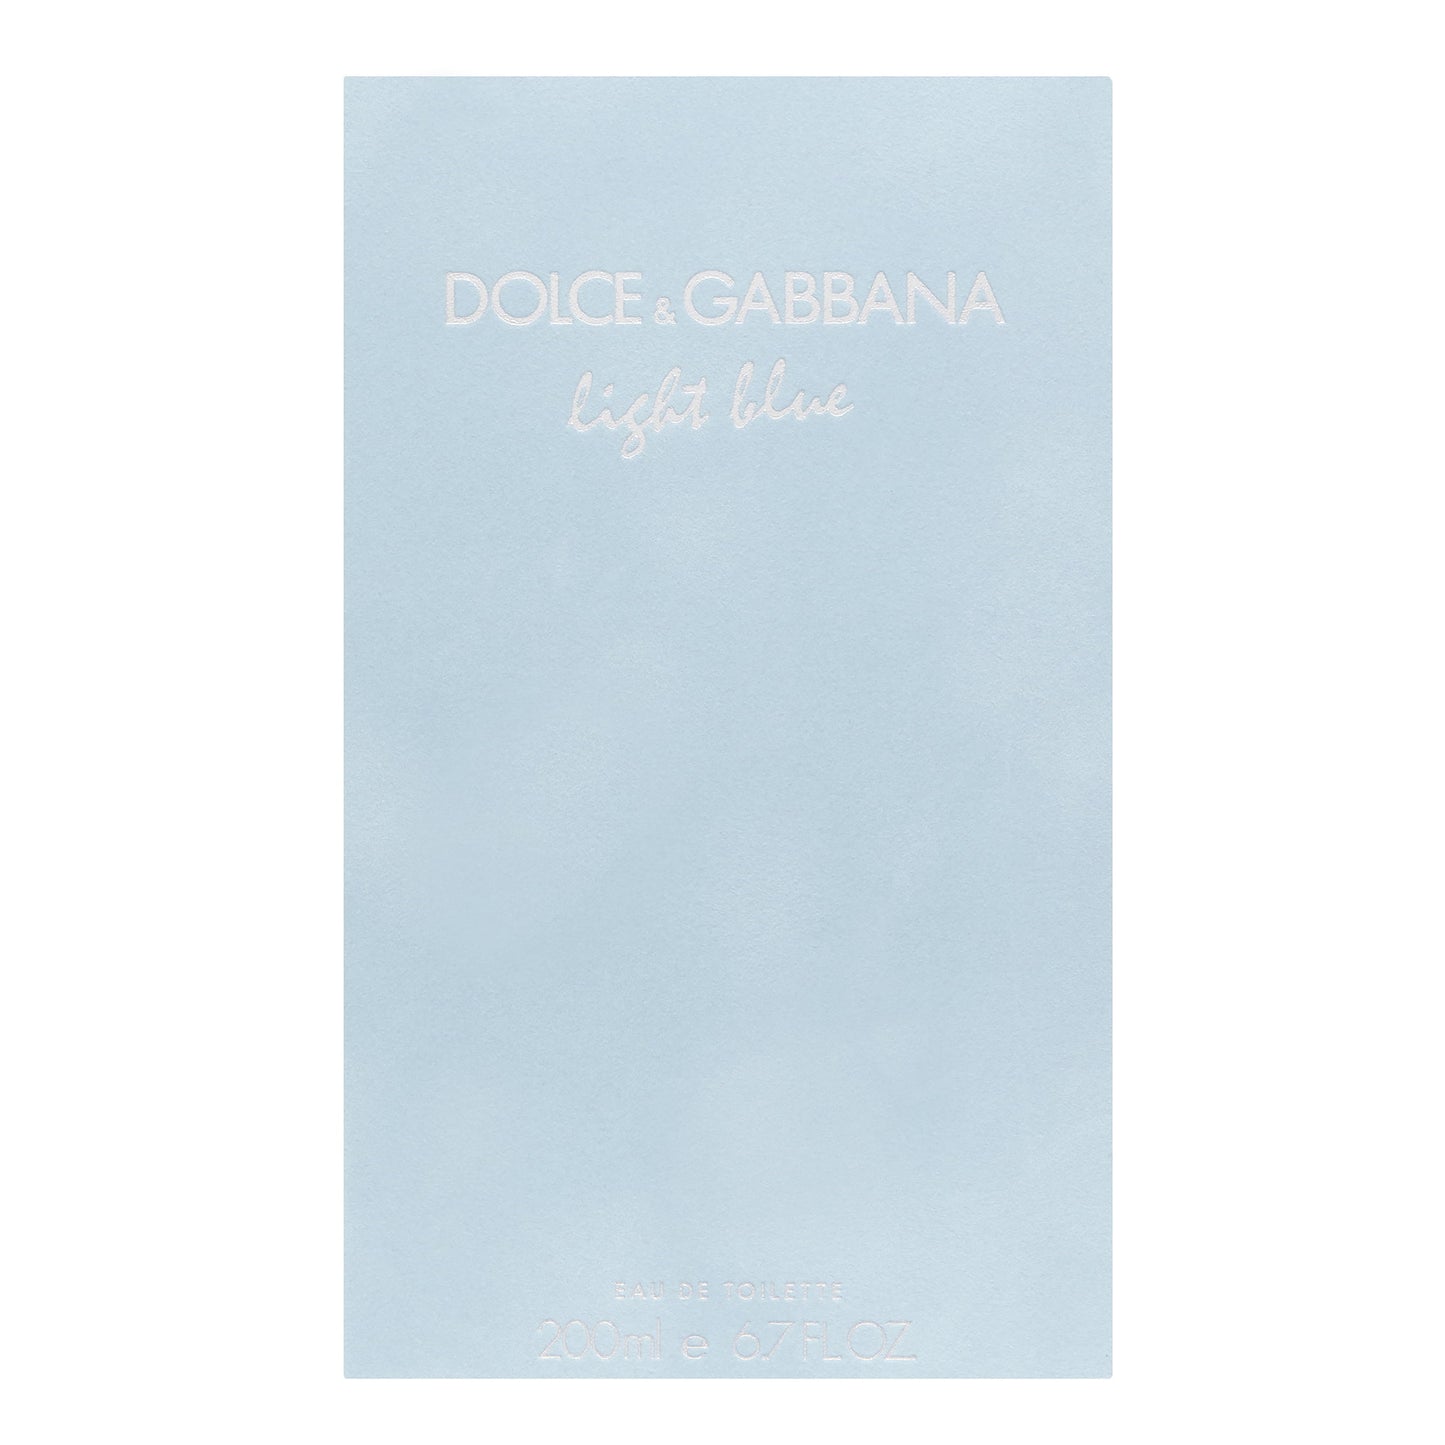 Light Blue Dolce & Gabanna